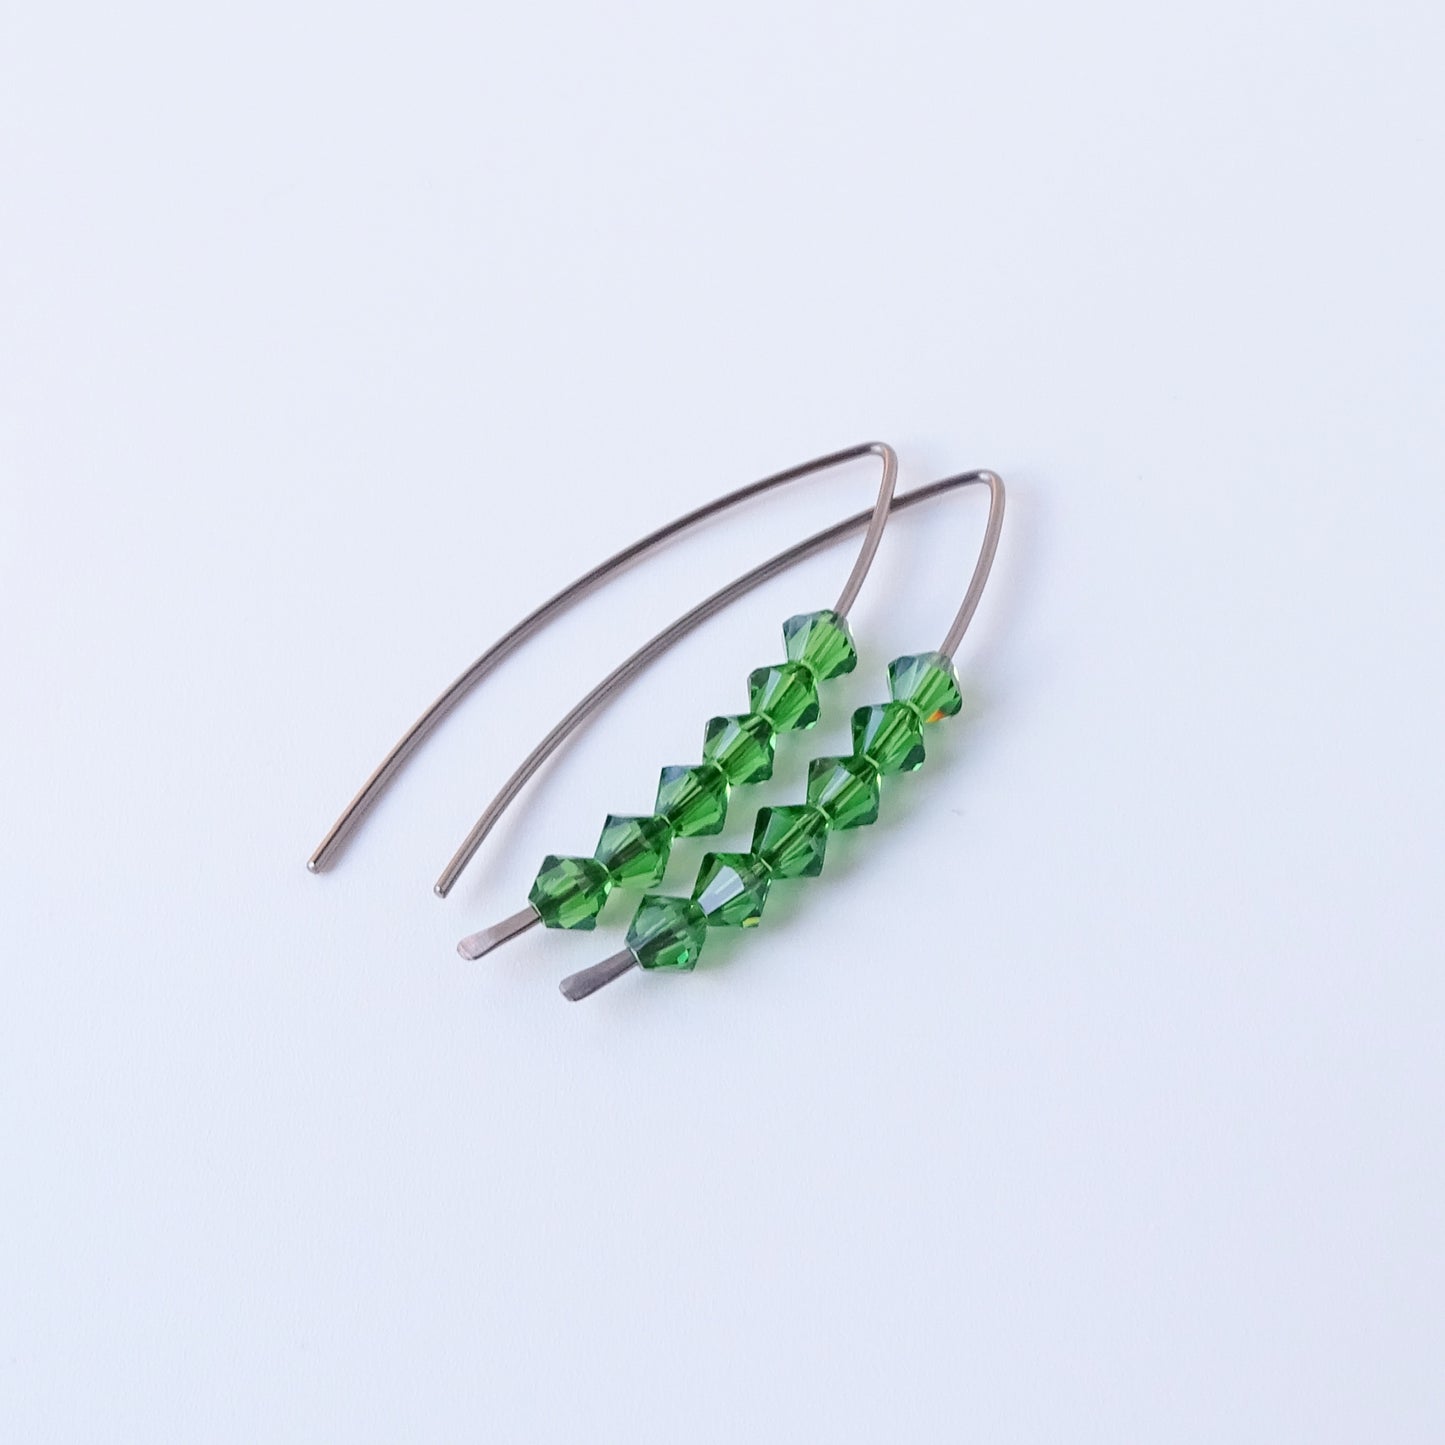 Niobium Earrings with Fern Green Crystals